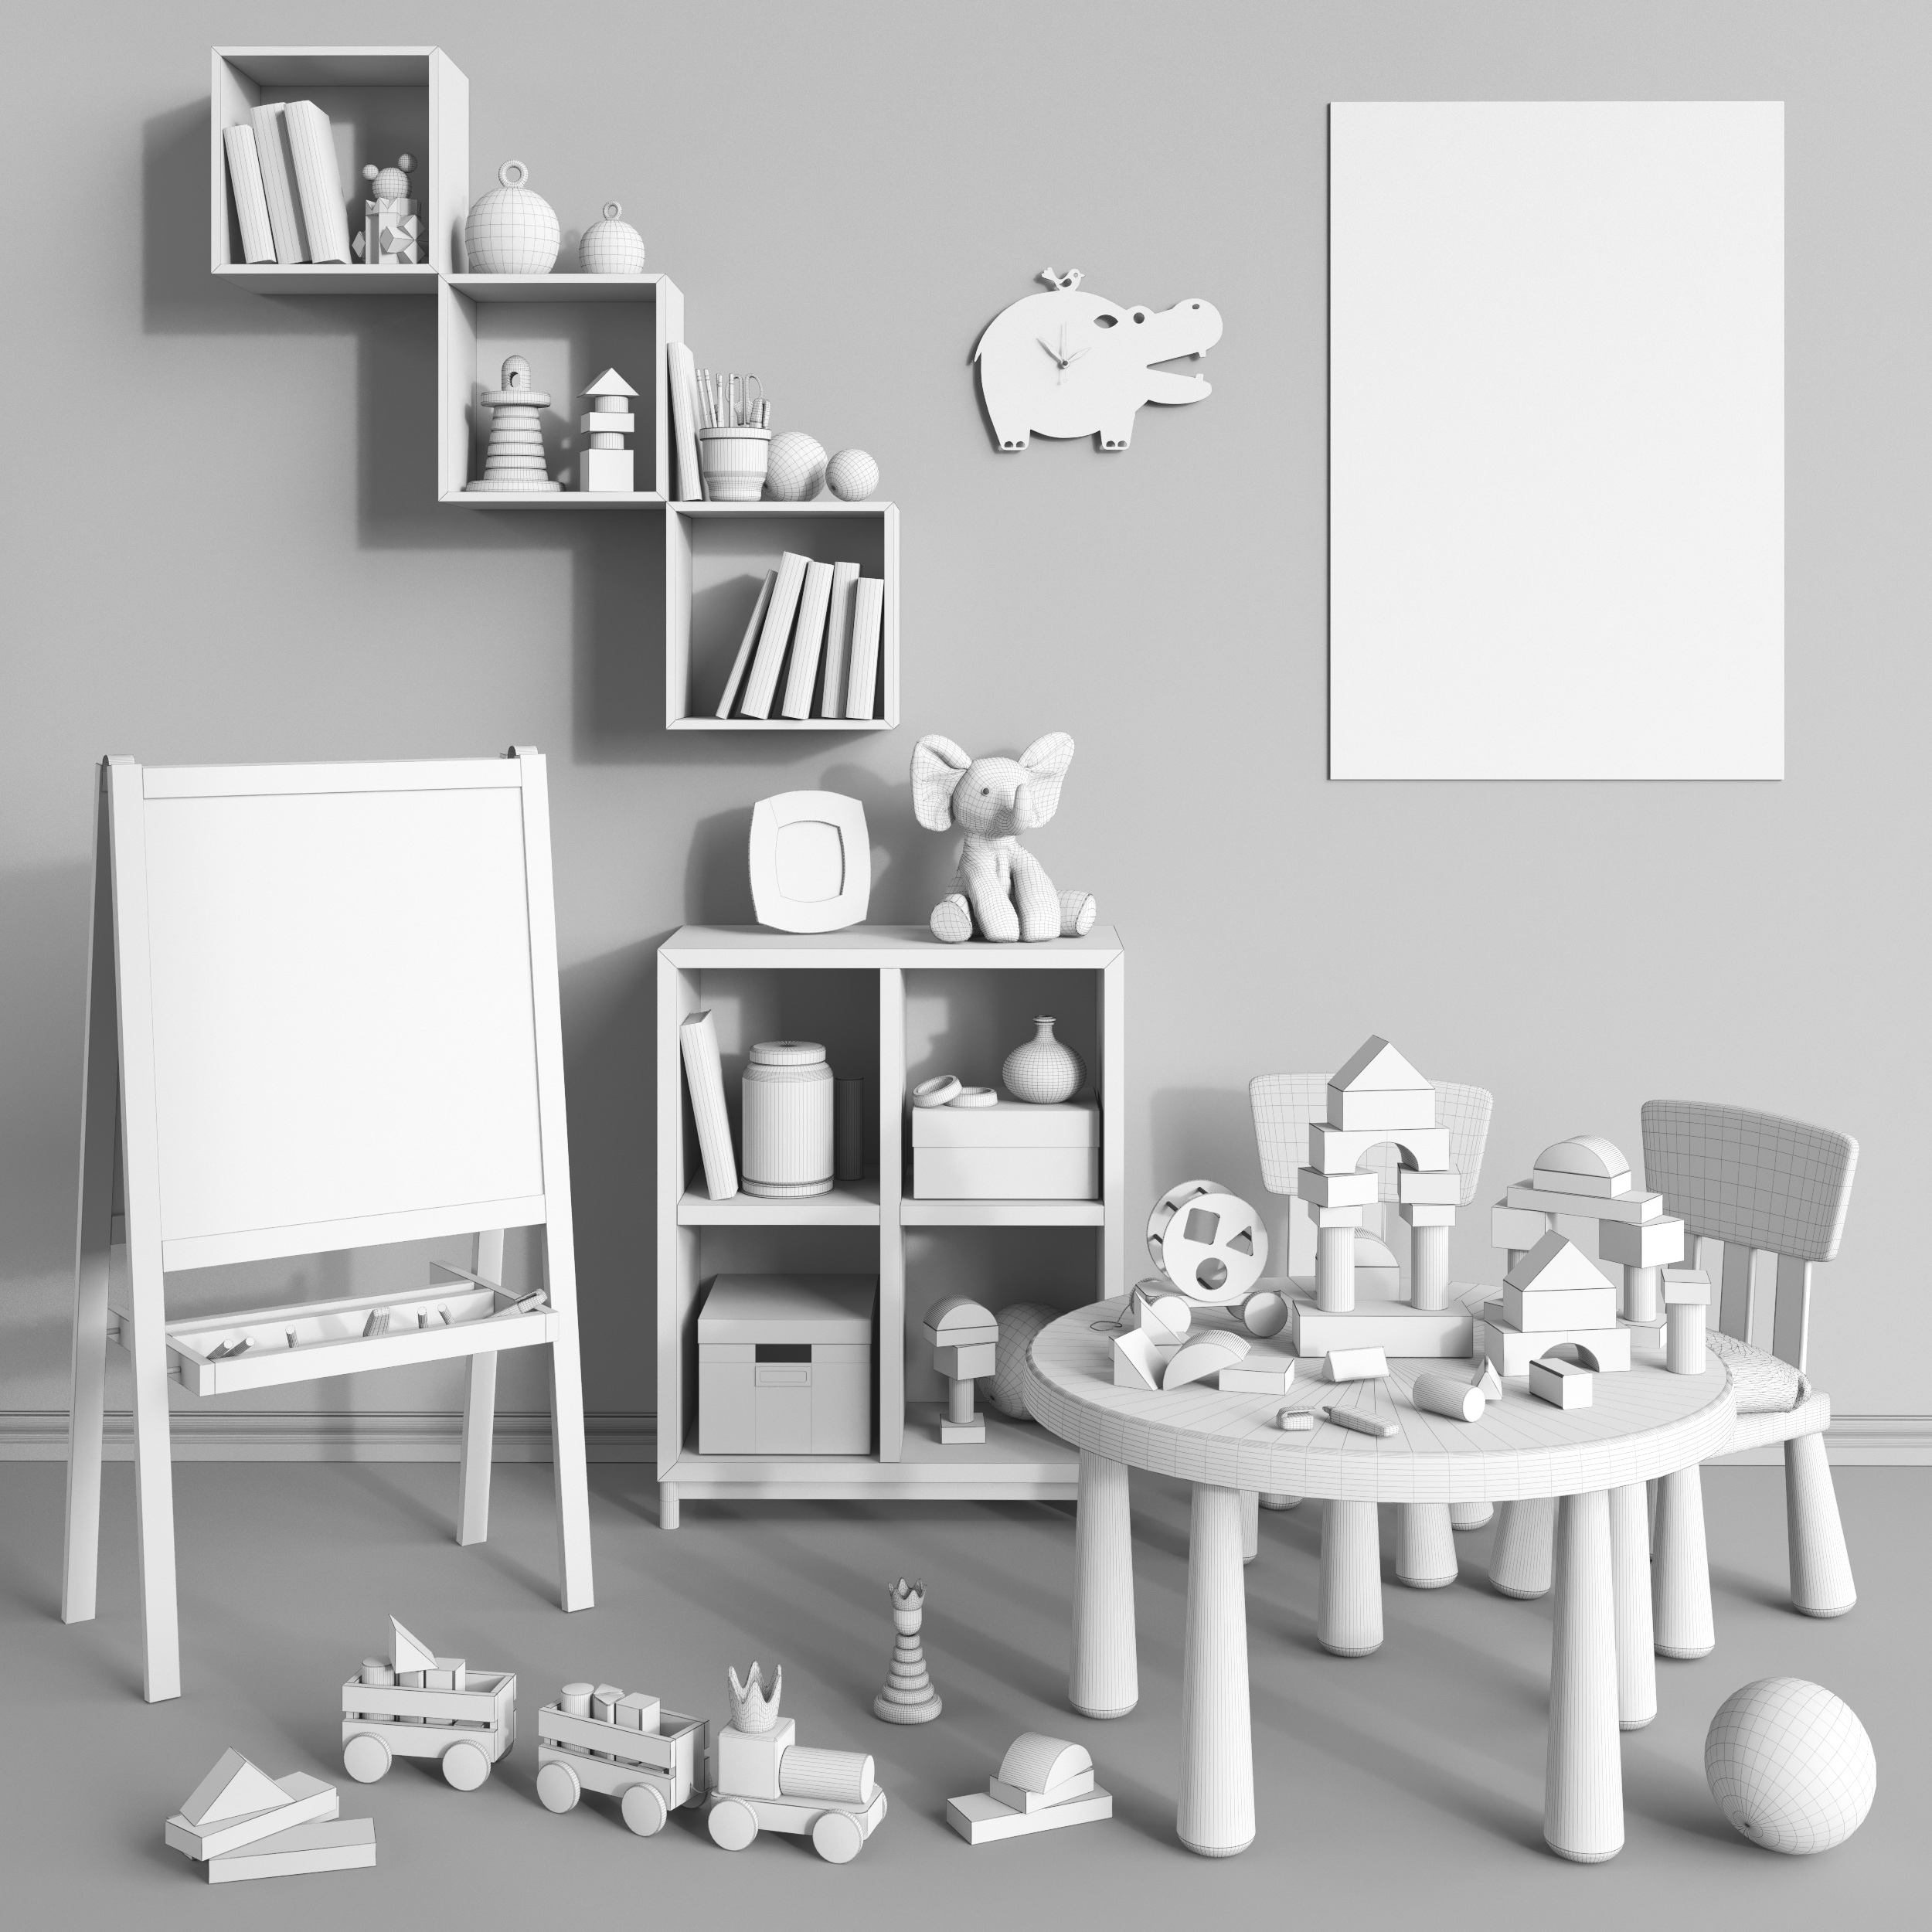 Decorative set / Full furniture set / Toys / Other Items 2